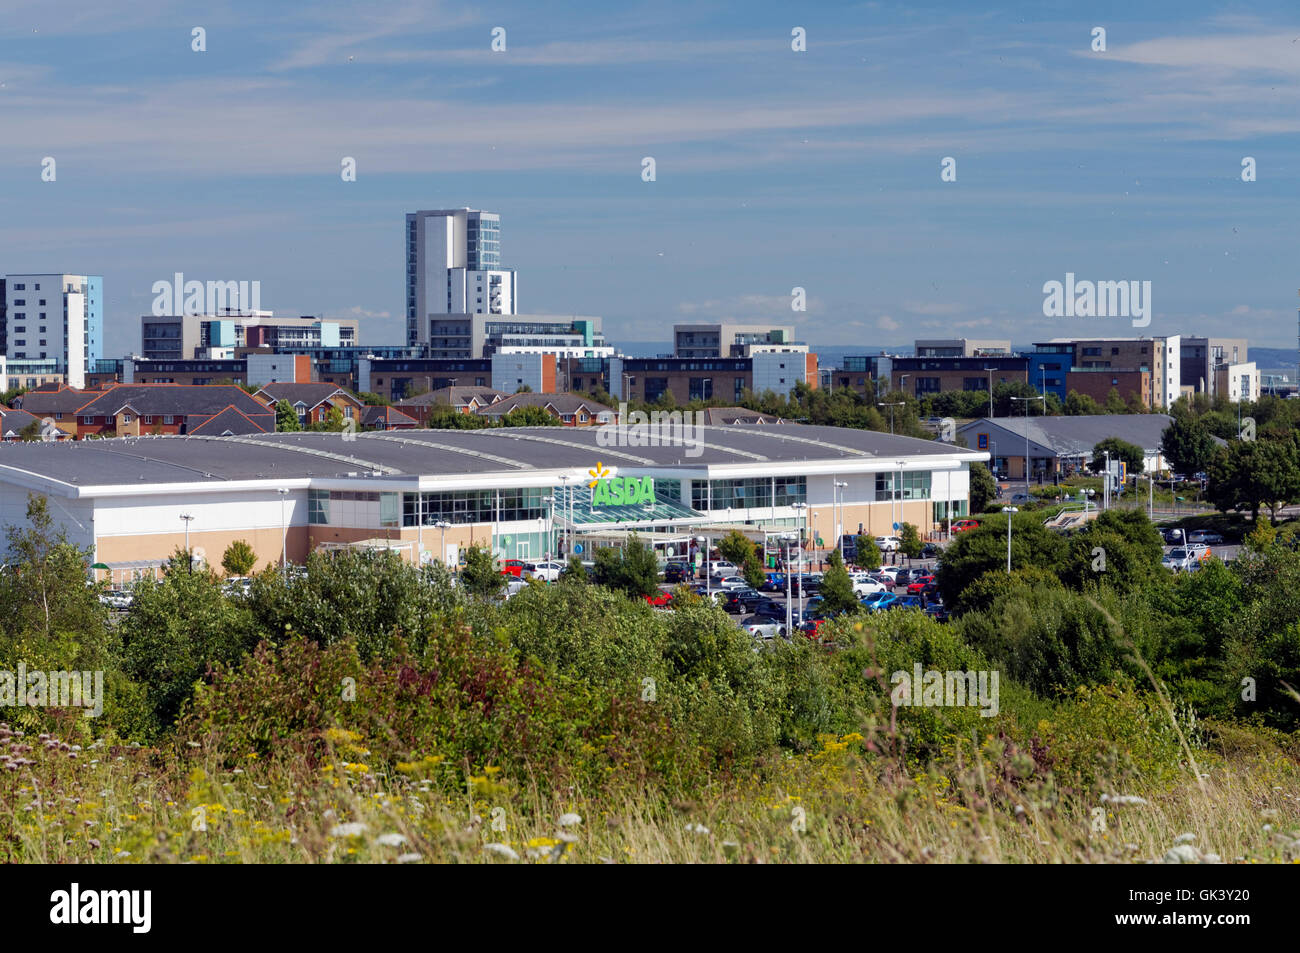 Asda supermarket, Ferry Road Retail Park, Cardiff, Wales. Stock Photo